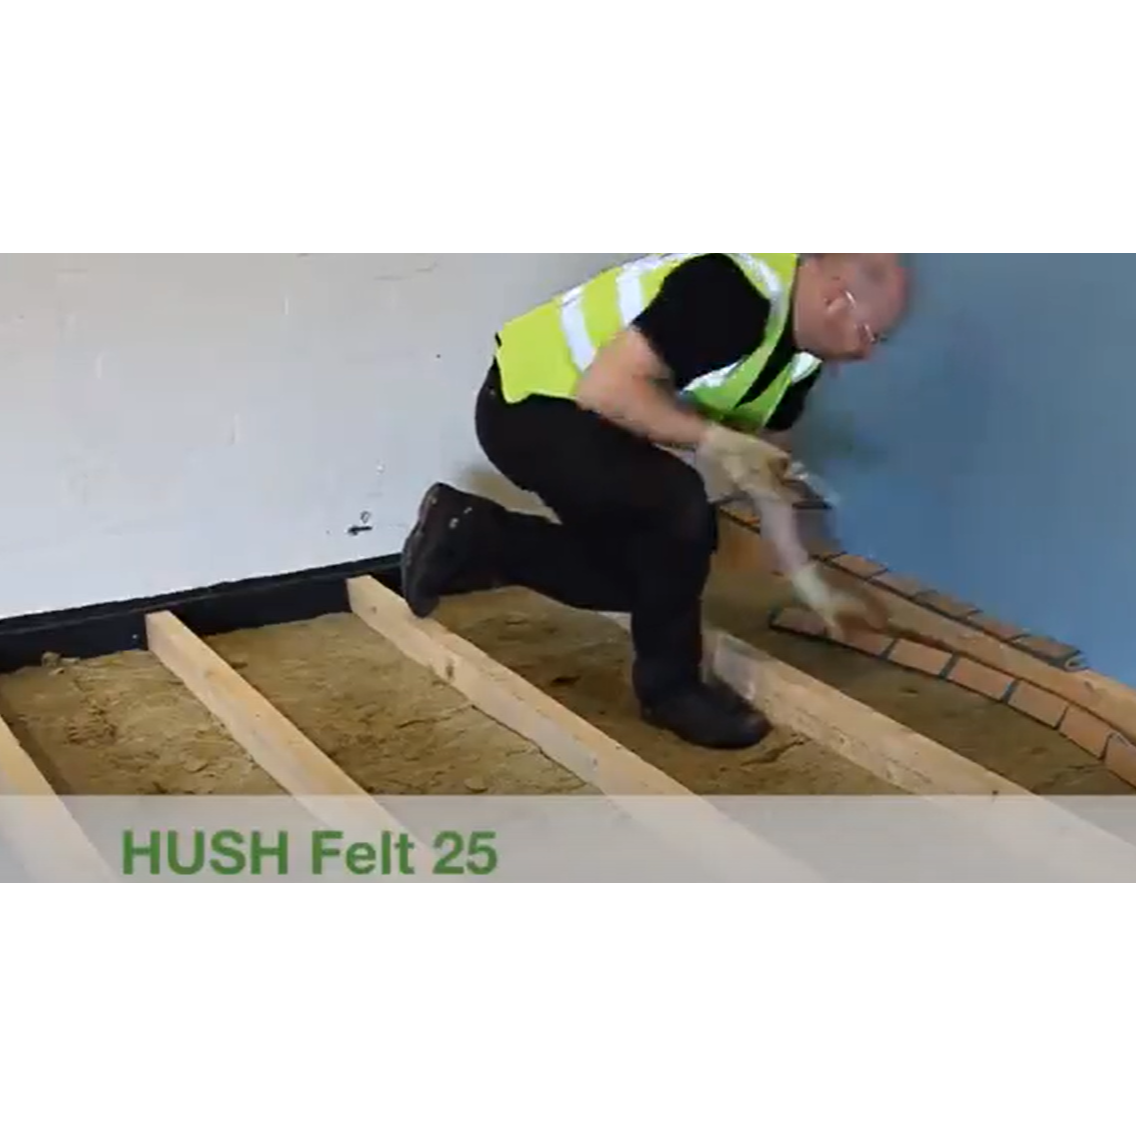 Hush Felt 25 acoustic joint strip: joist treatment for sound insulation between separating floors